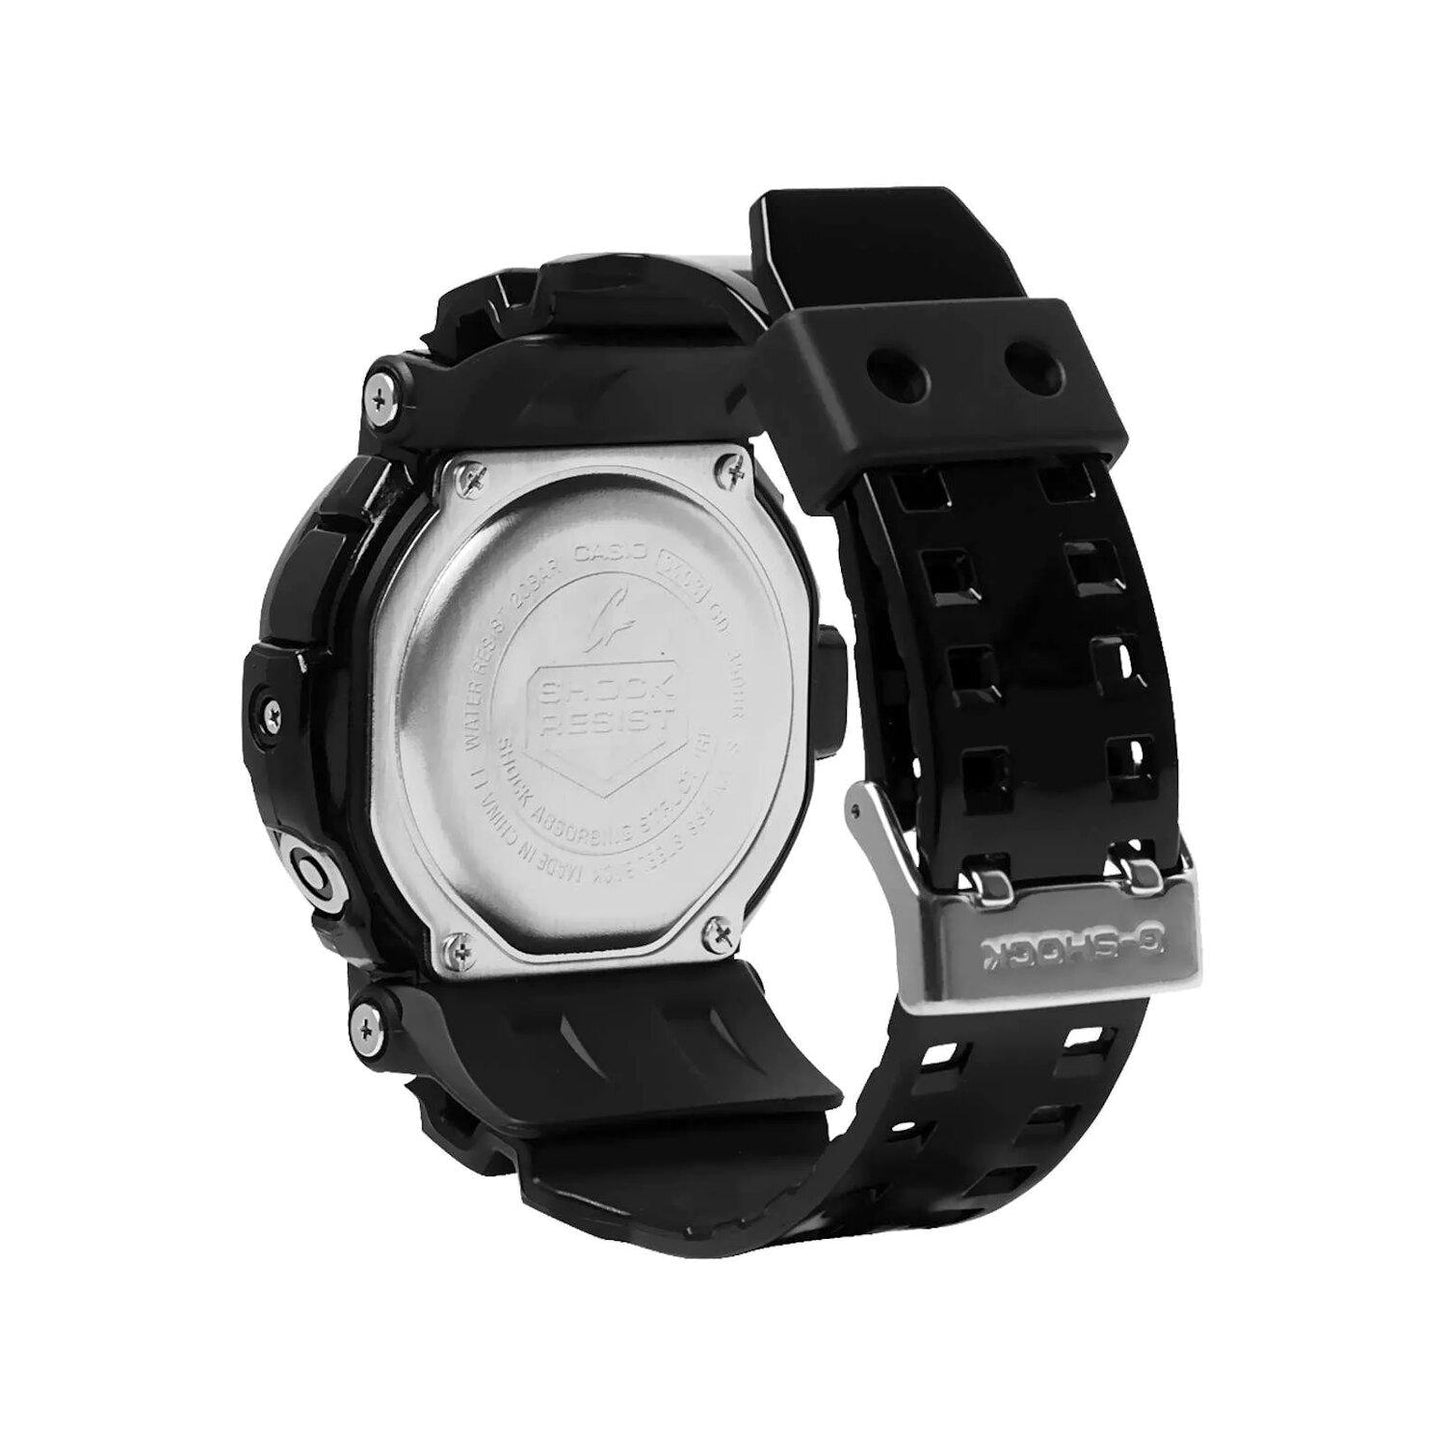 Reloj CASIO GD-350-1BCR G-SHOCK PROTECTION-Negro